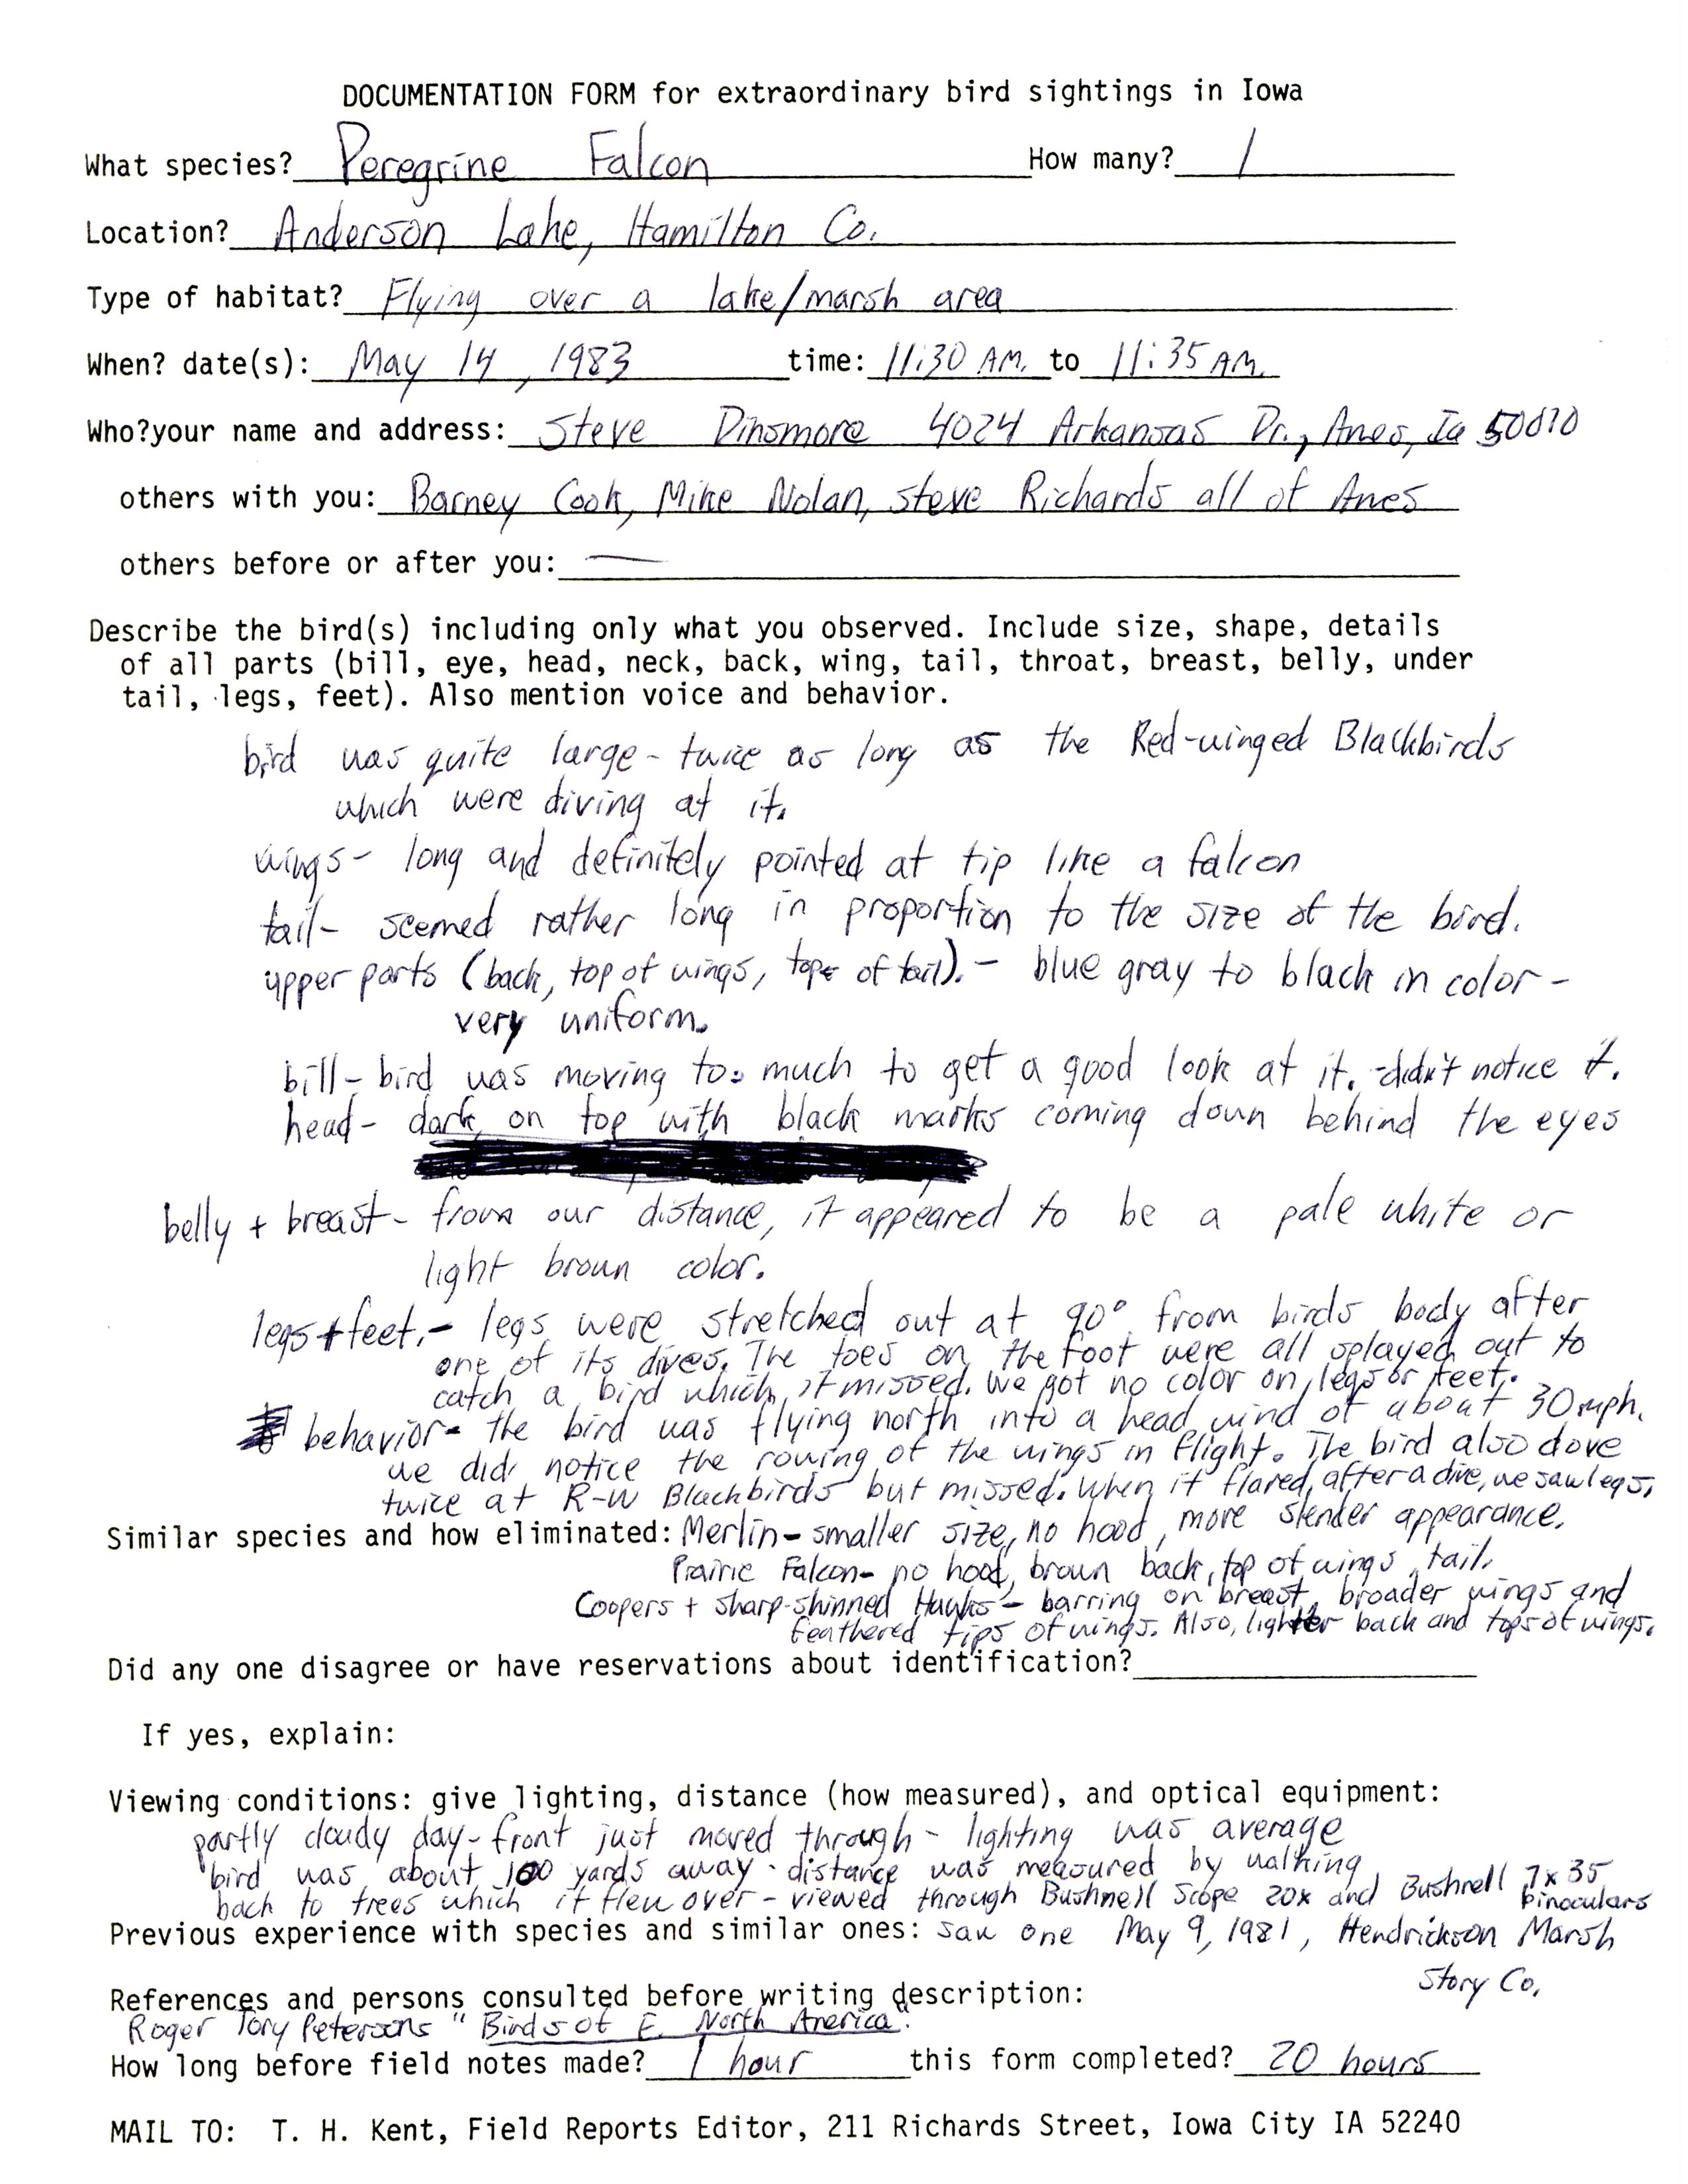 Rare bird documentation form for Peregrine Falcon at Anderson Goose Lake, 1983